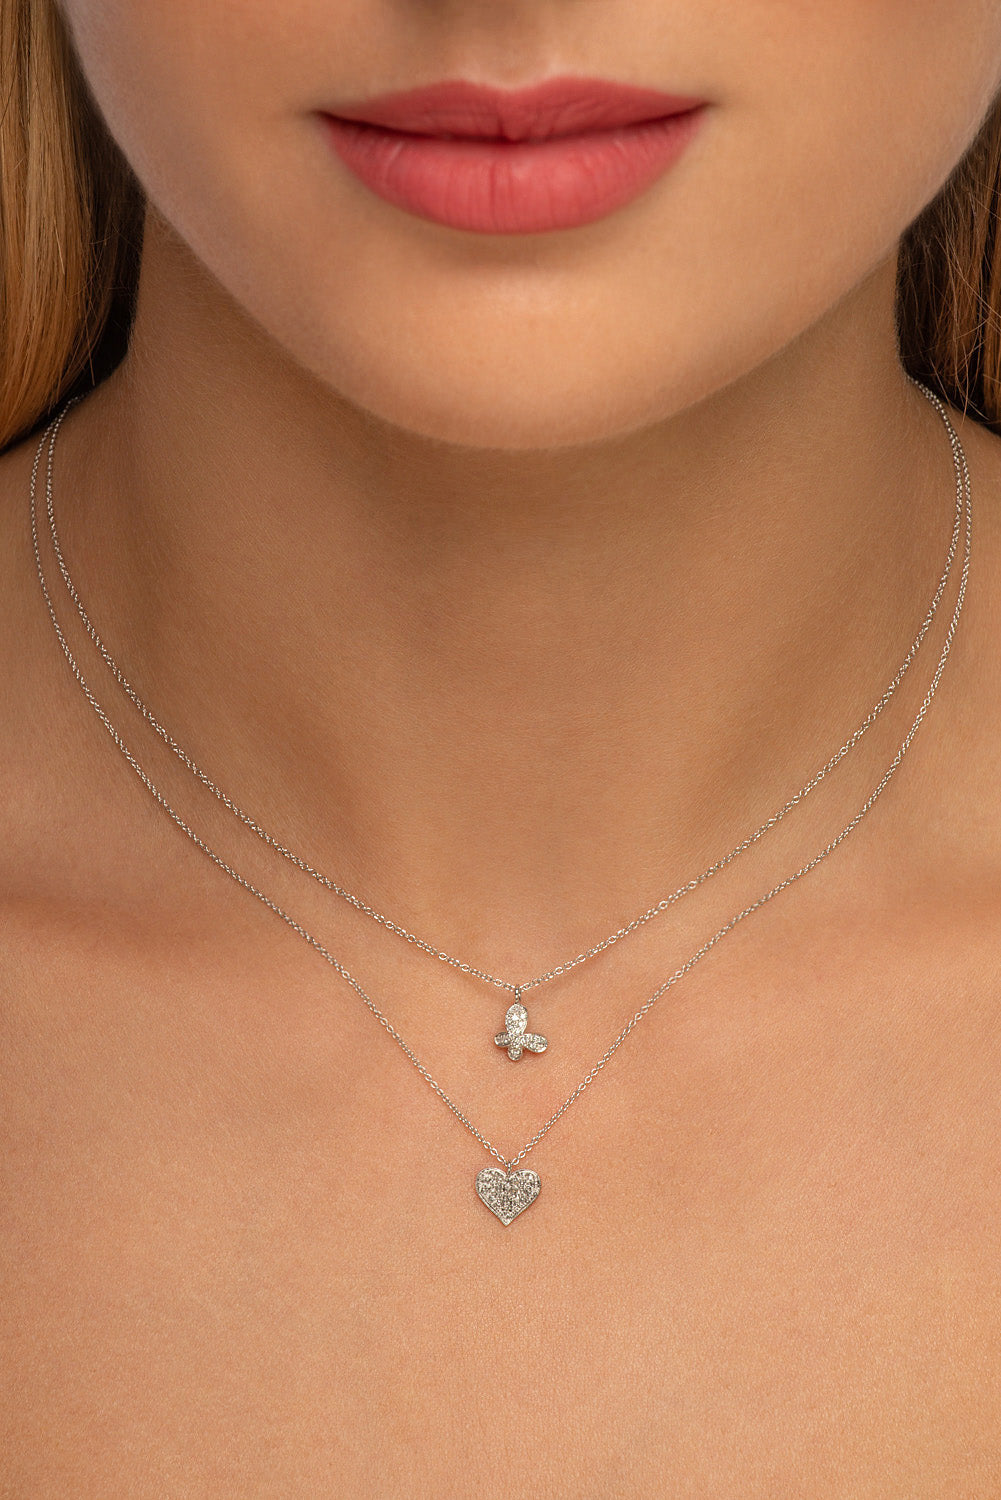 Flat Diamond Heart Necklace